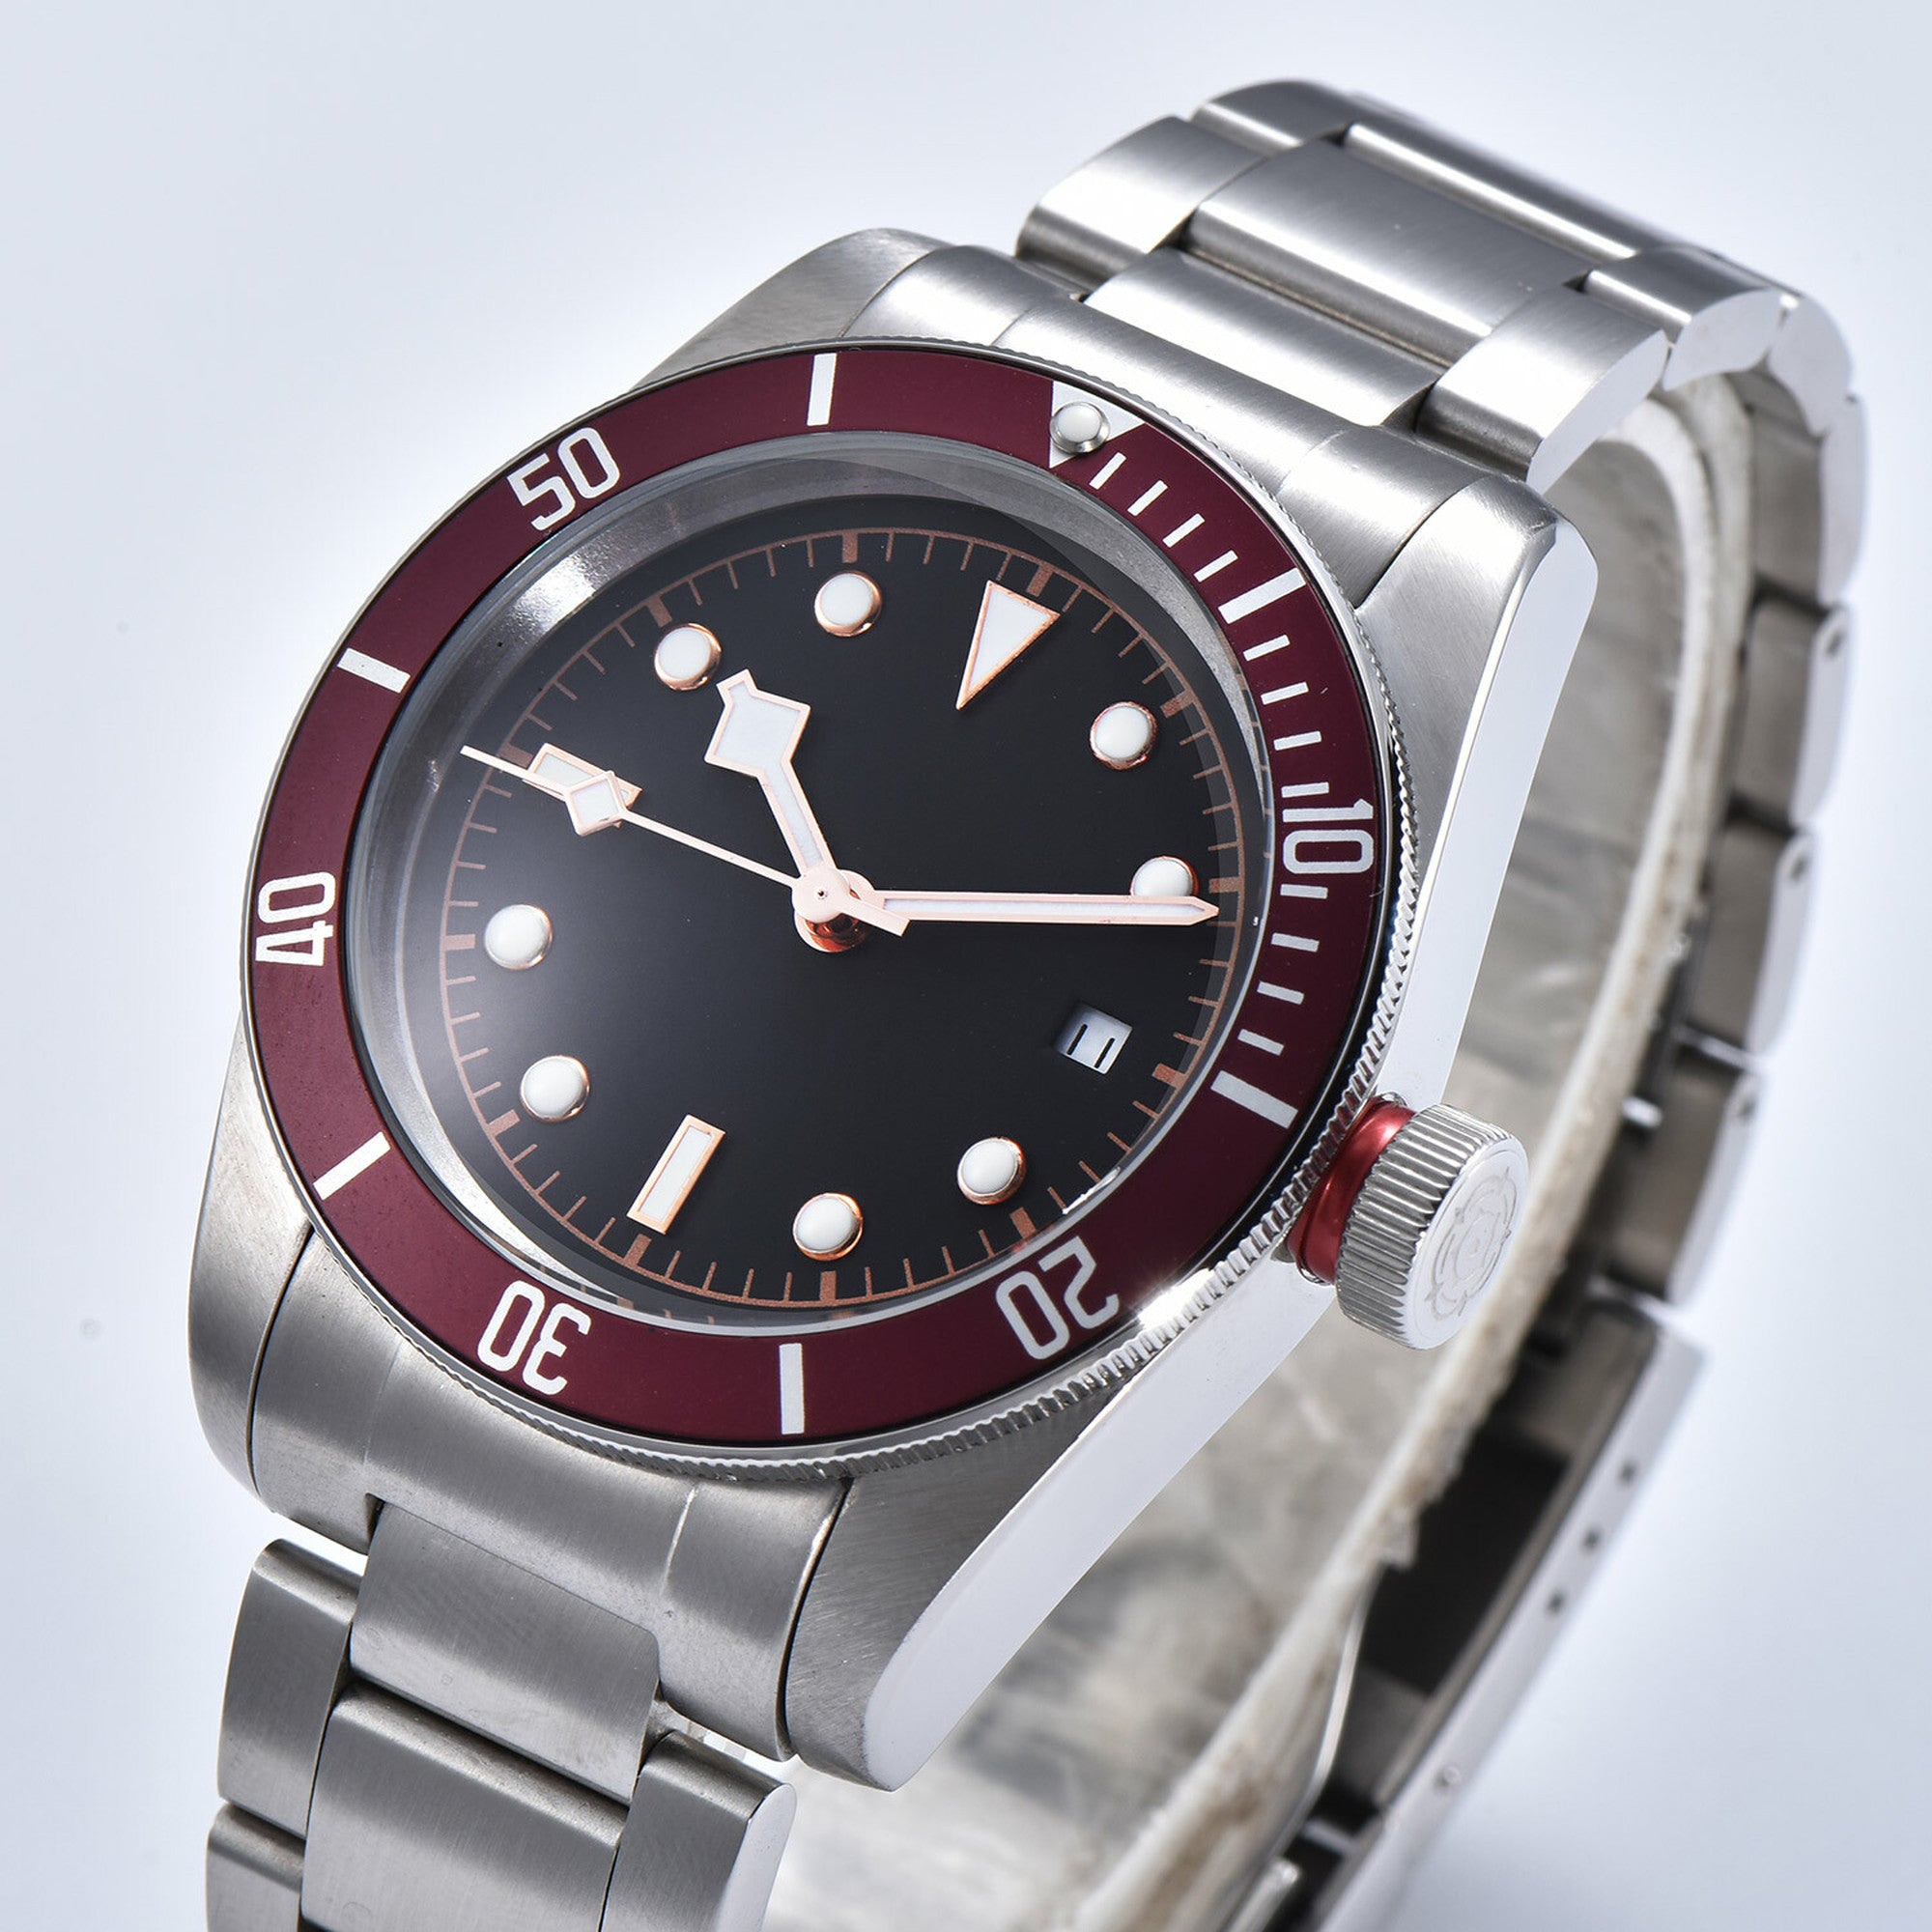 Men's Mechanical Self-winding Black Bay Date Watch Red, Gold / Suit, Popular Brand / Fashion B58